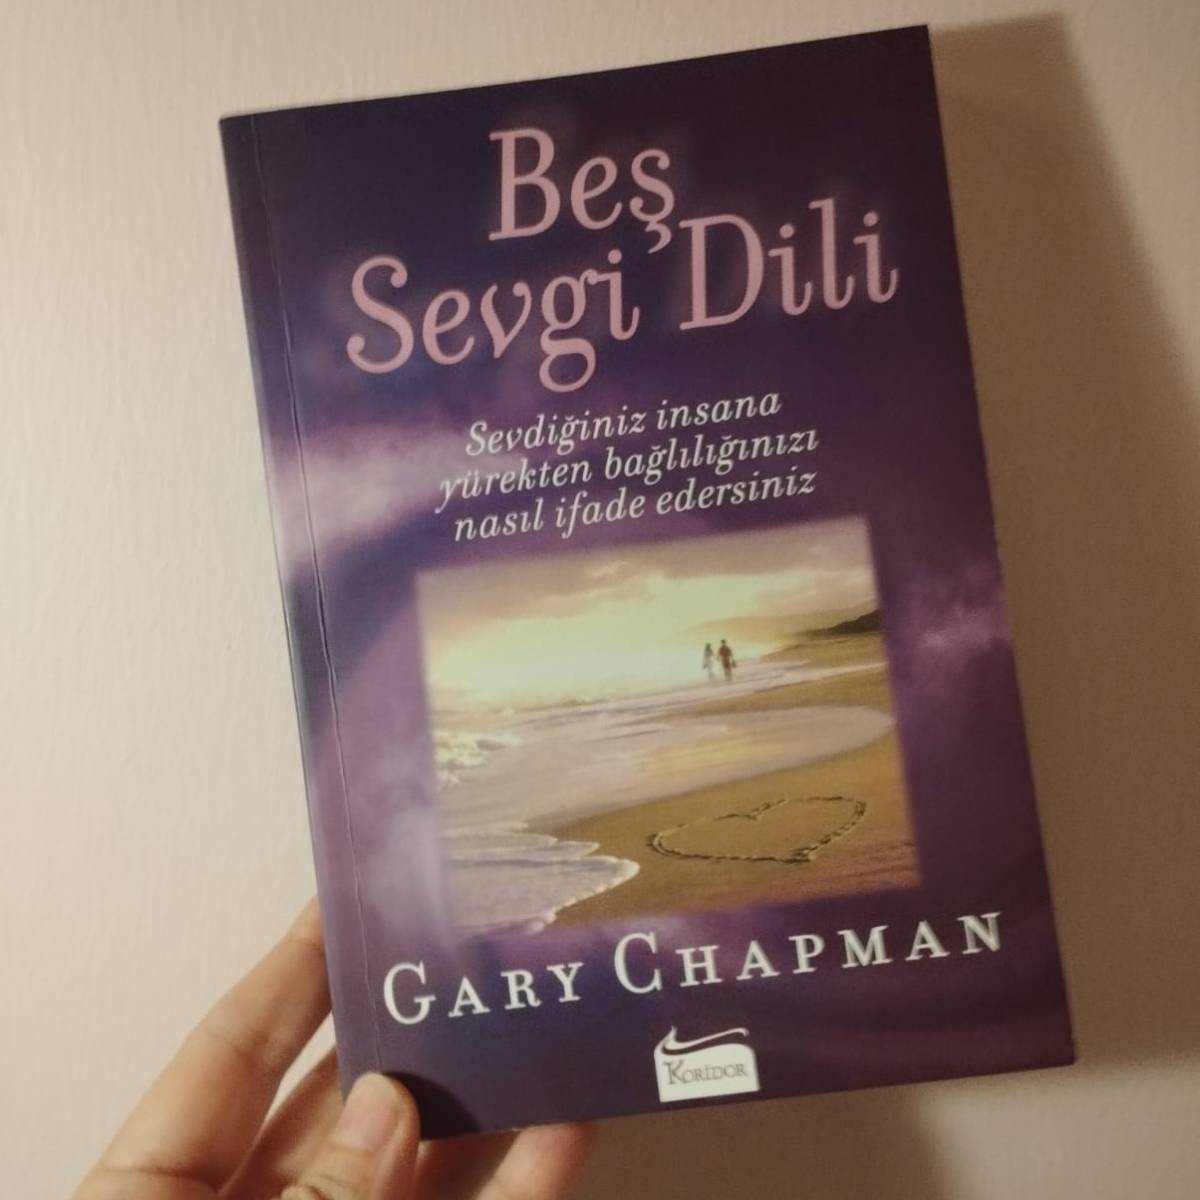 Beş Sevgi Dili (Gary Chapman)